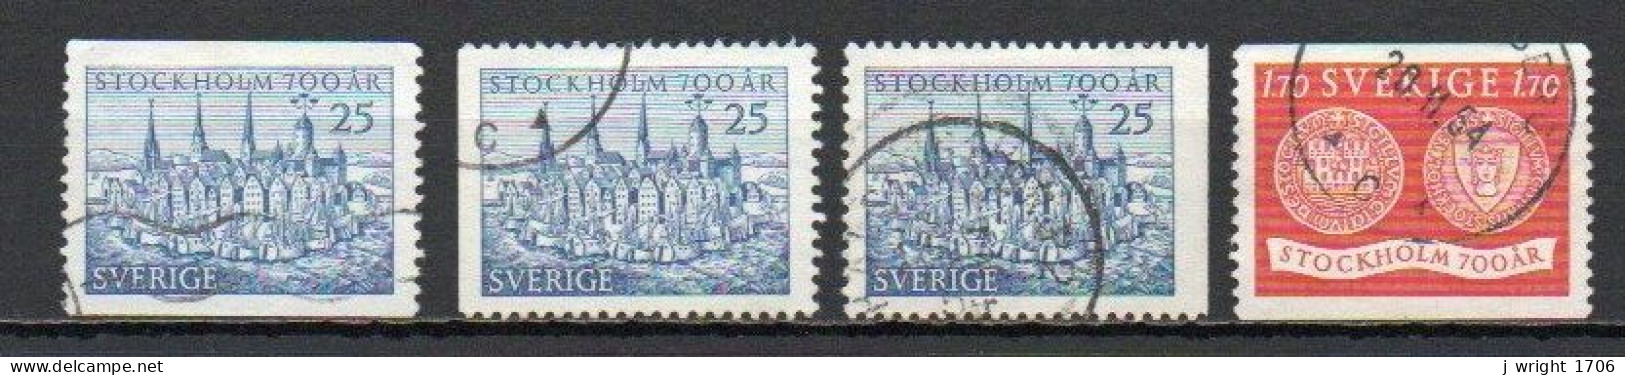 Sweden, 1953, Stockholm 700th Anniv, Set, USED - Usati